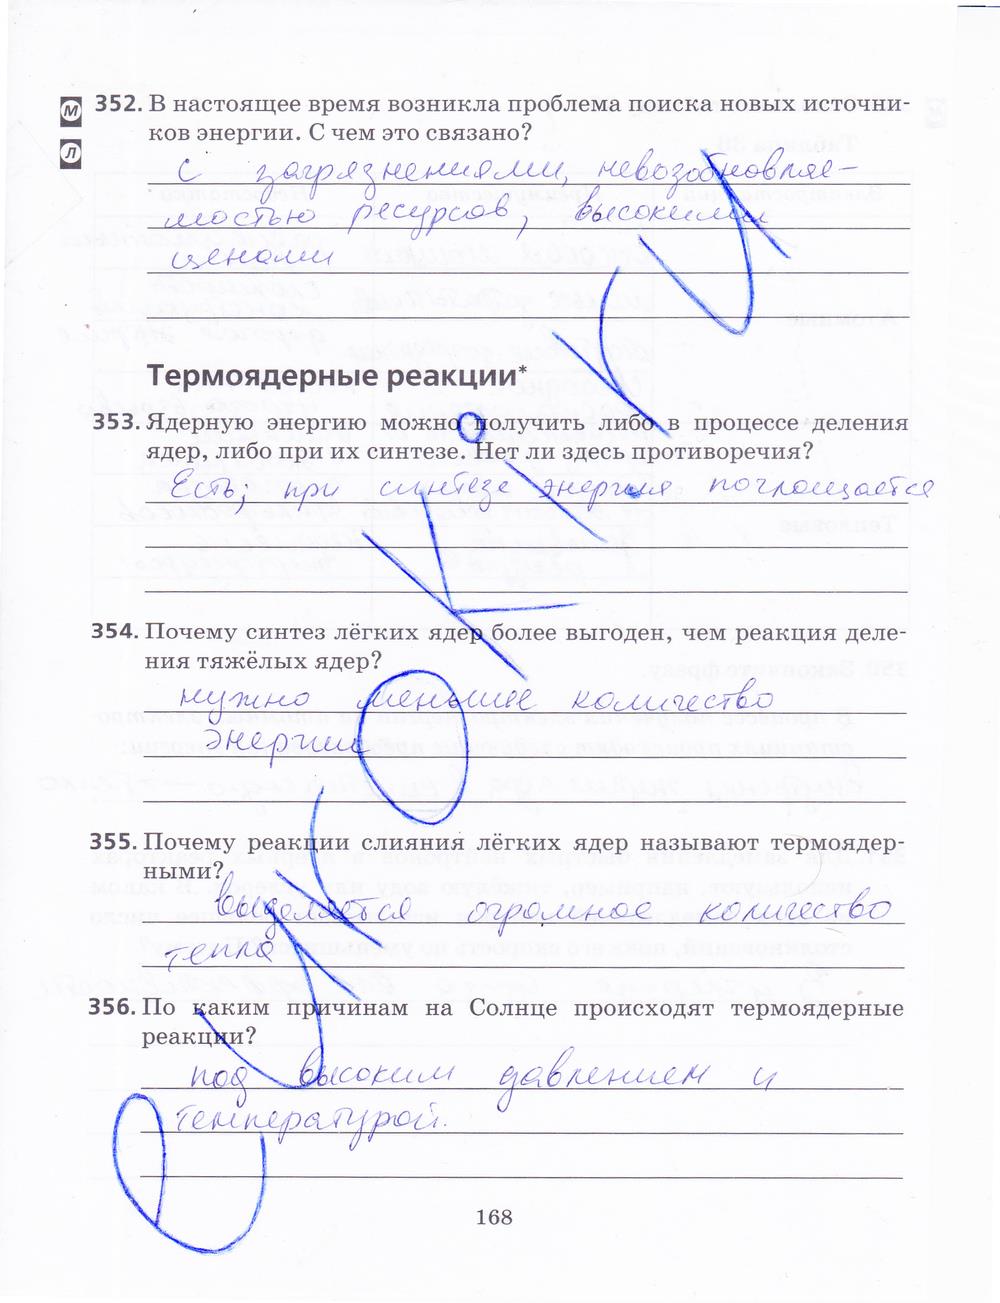 гдз 9 класс рабочая тетрадь страница 168 физика Пурышева, Важеевская, Чаругин